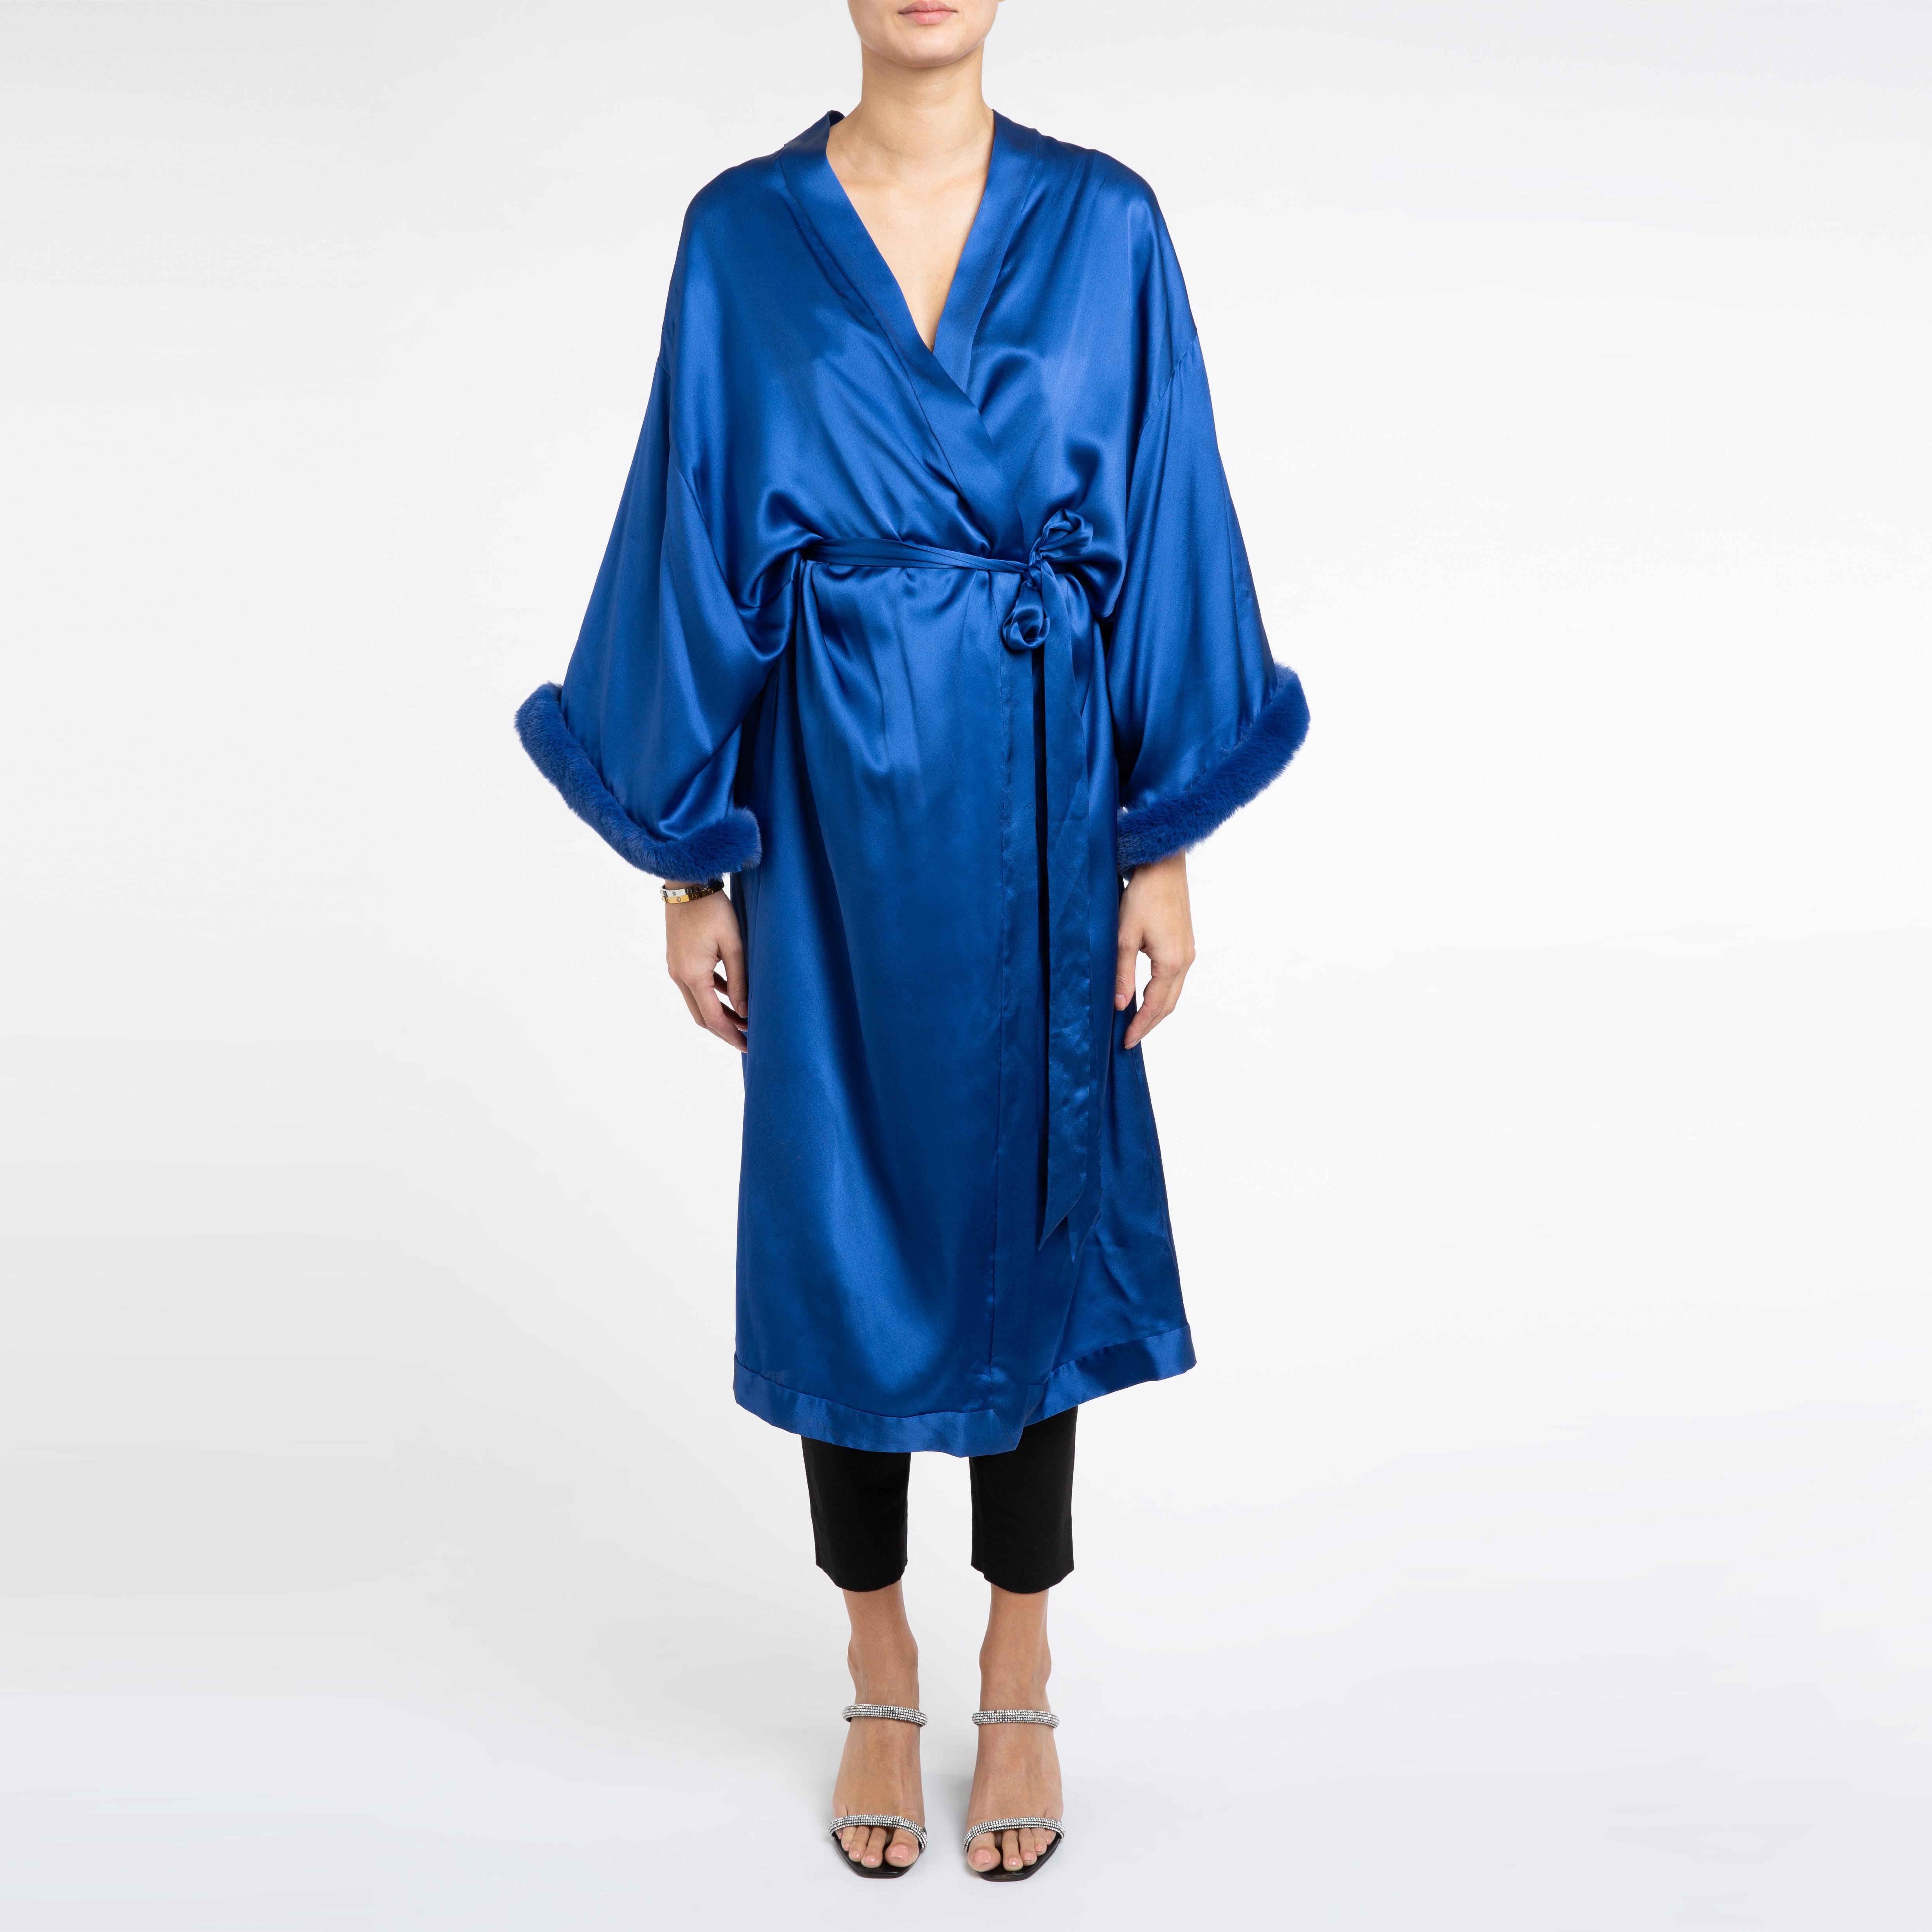 Verheyen London Blue Kimono in Italian Silk Satin with Faux Fur - Small-medium  For Sale 1